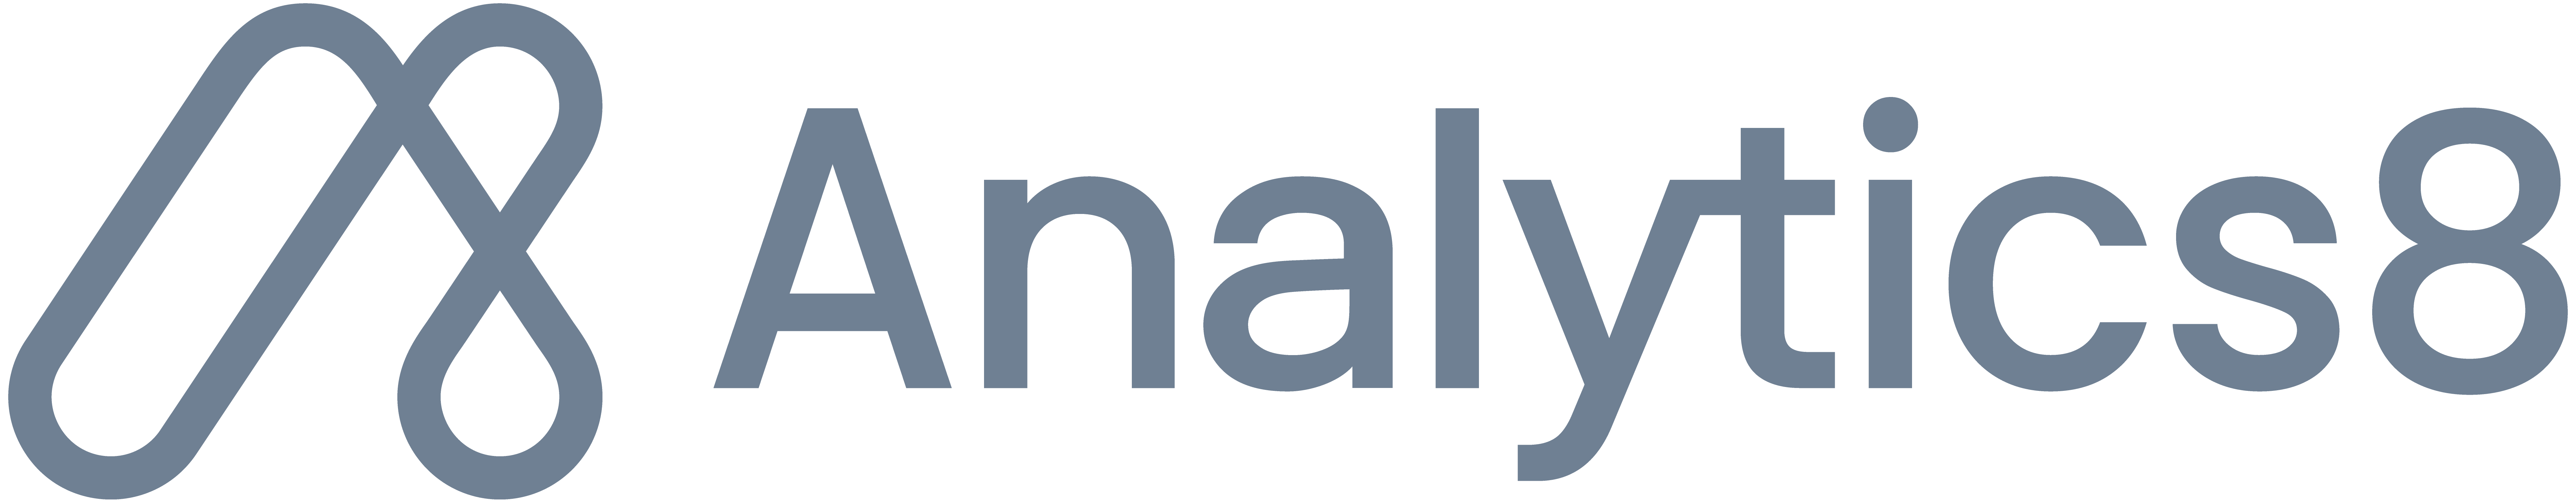 New-Analytics8-logo-black-highres.png